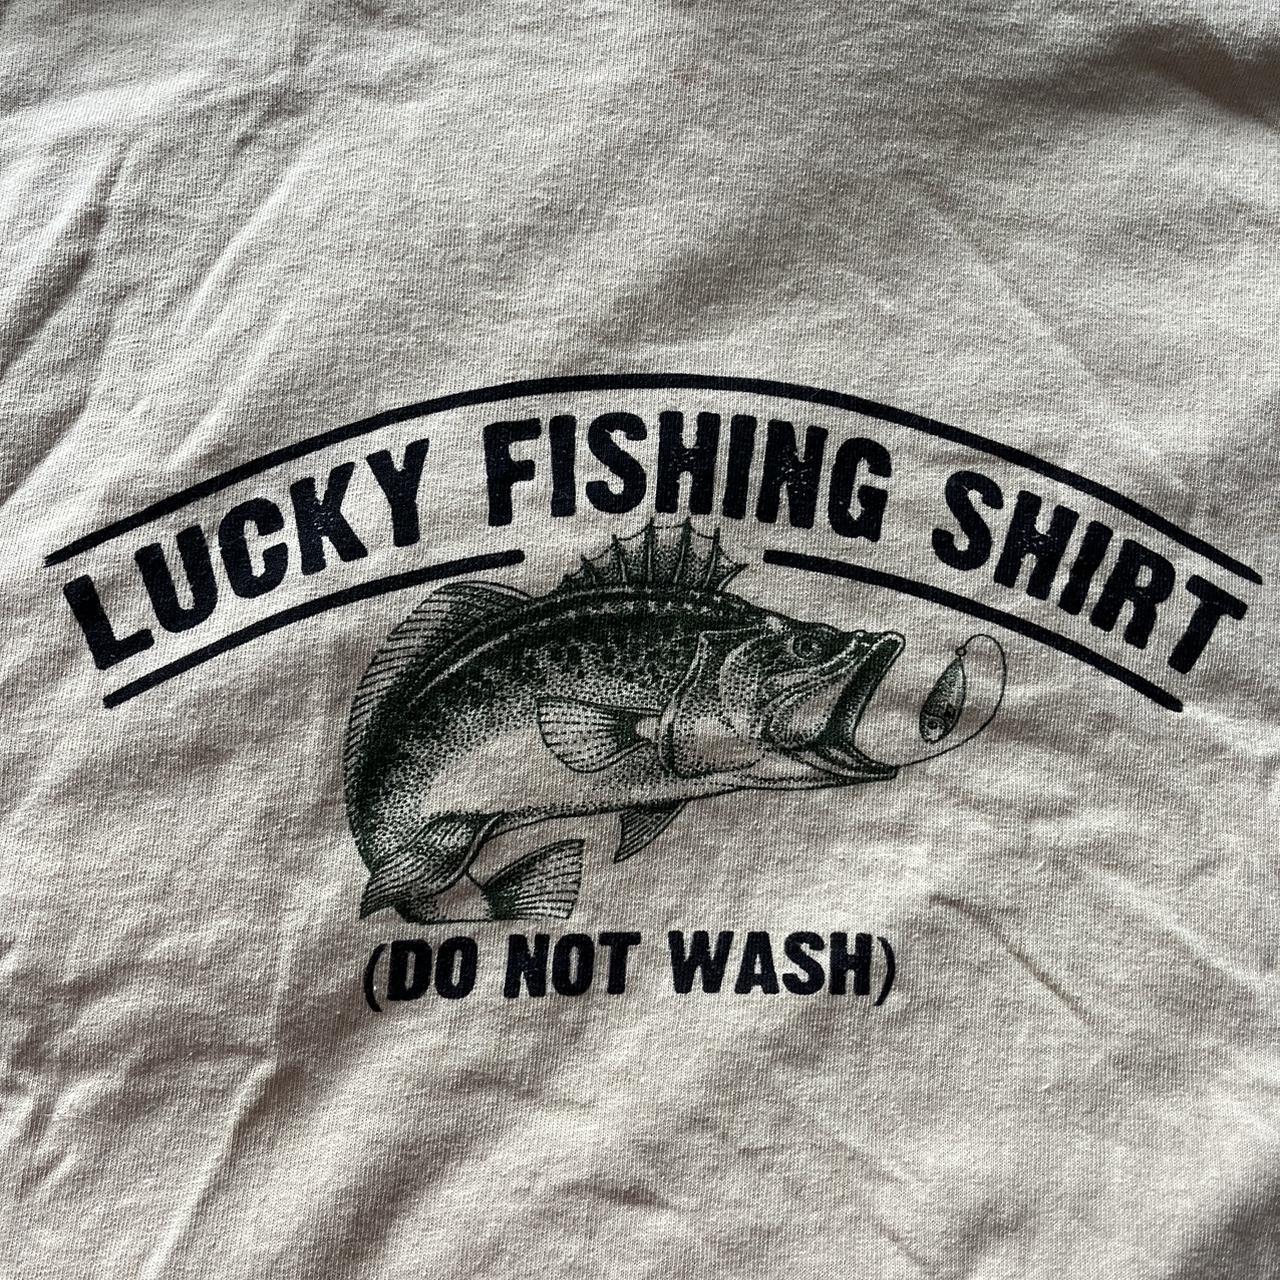 Fishing shirt. Soft material. Worn but no noticeable - Depop